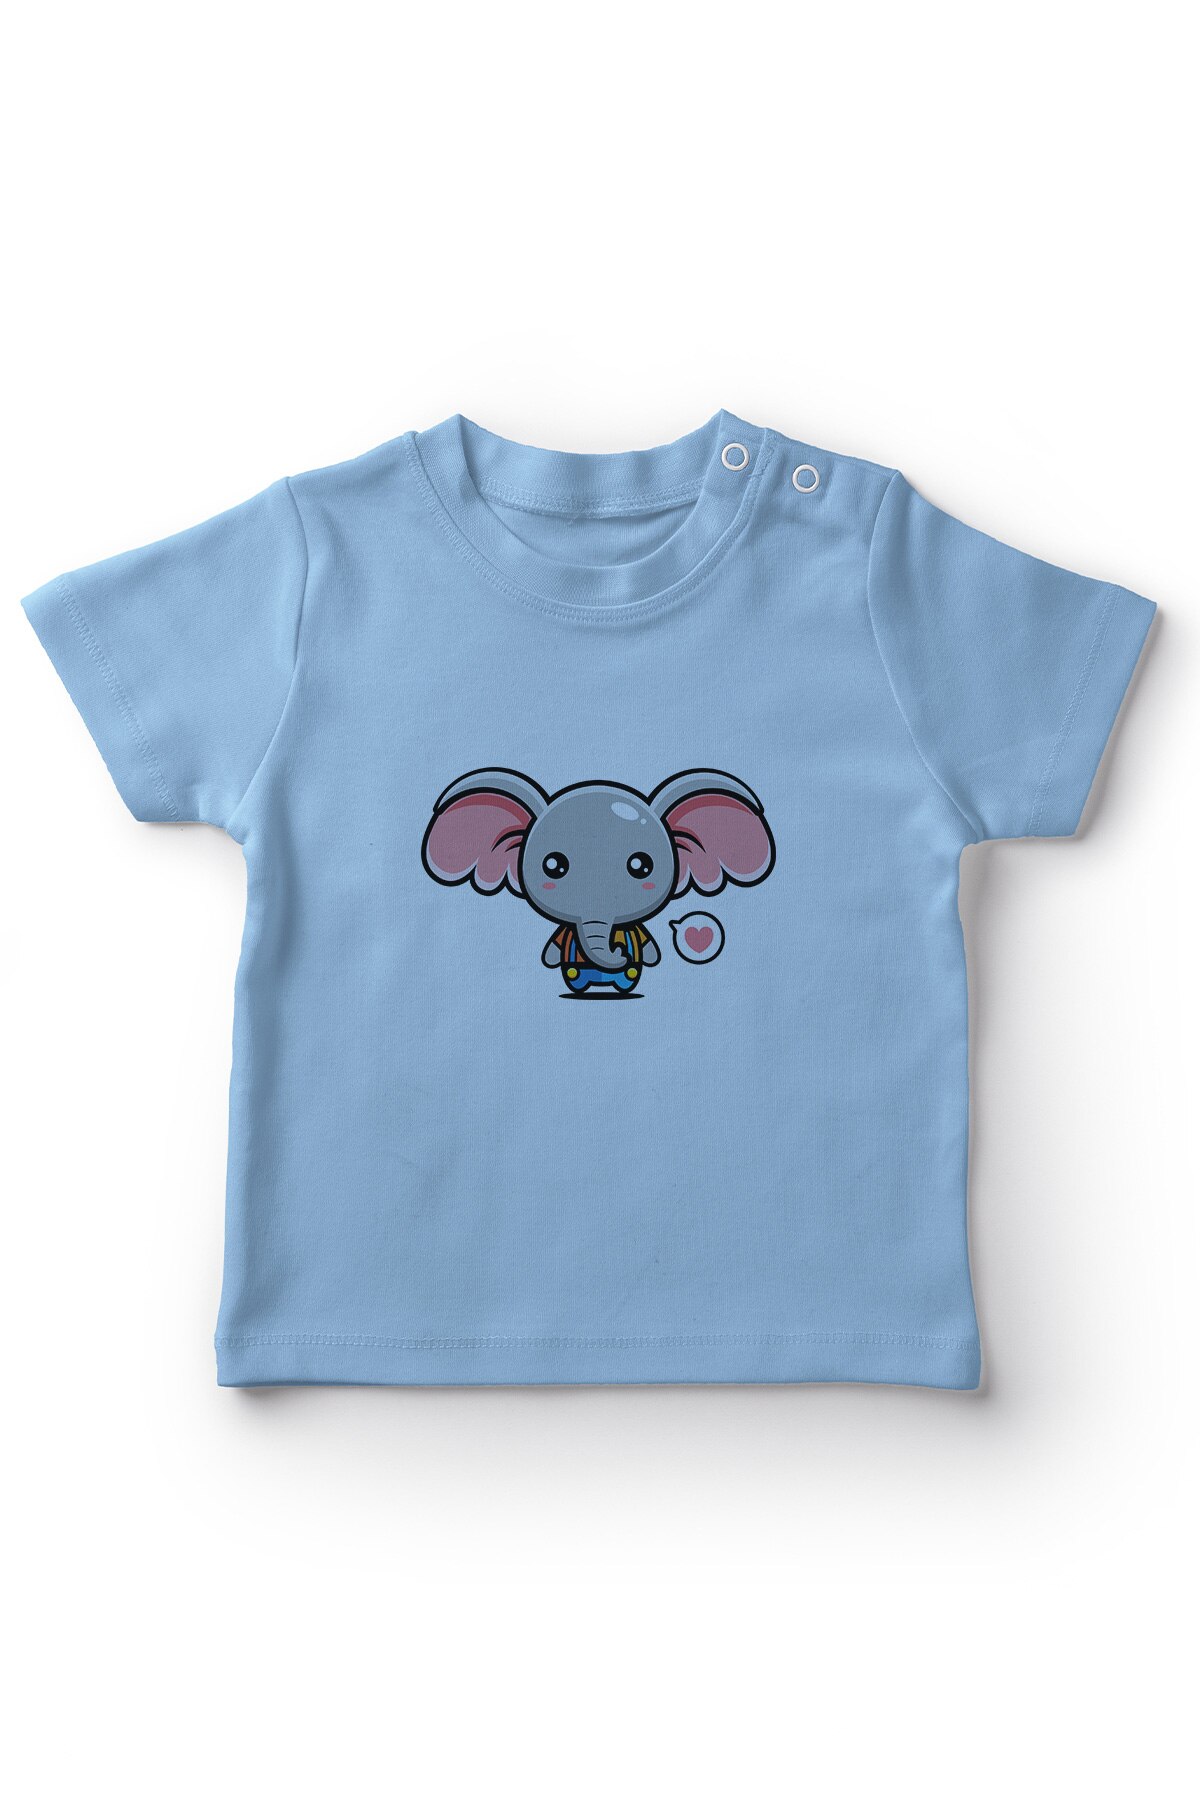 Angemiel Baby Gekleed In Overalls Leuke Olifant Baby Boy T-shirt Blauw